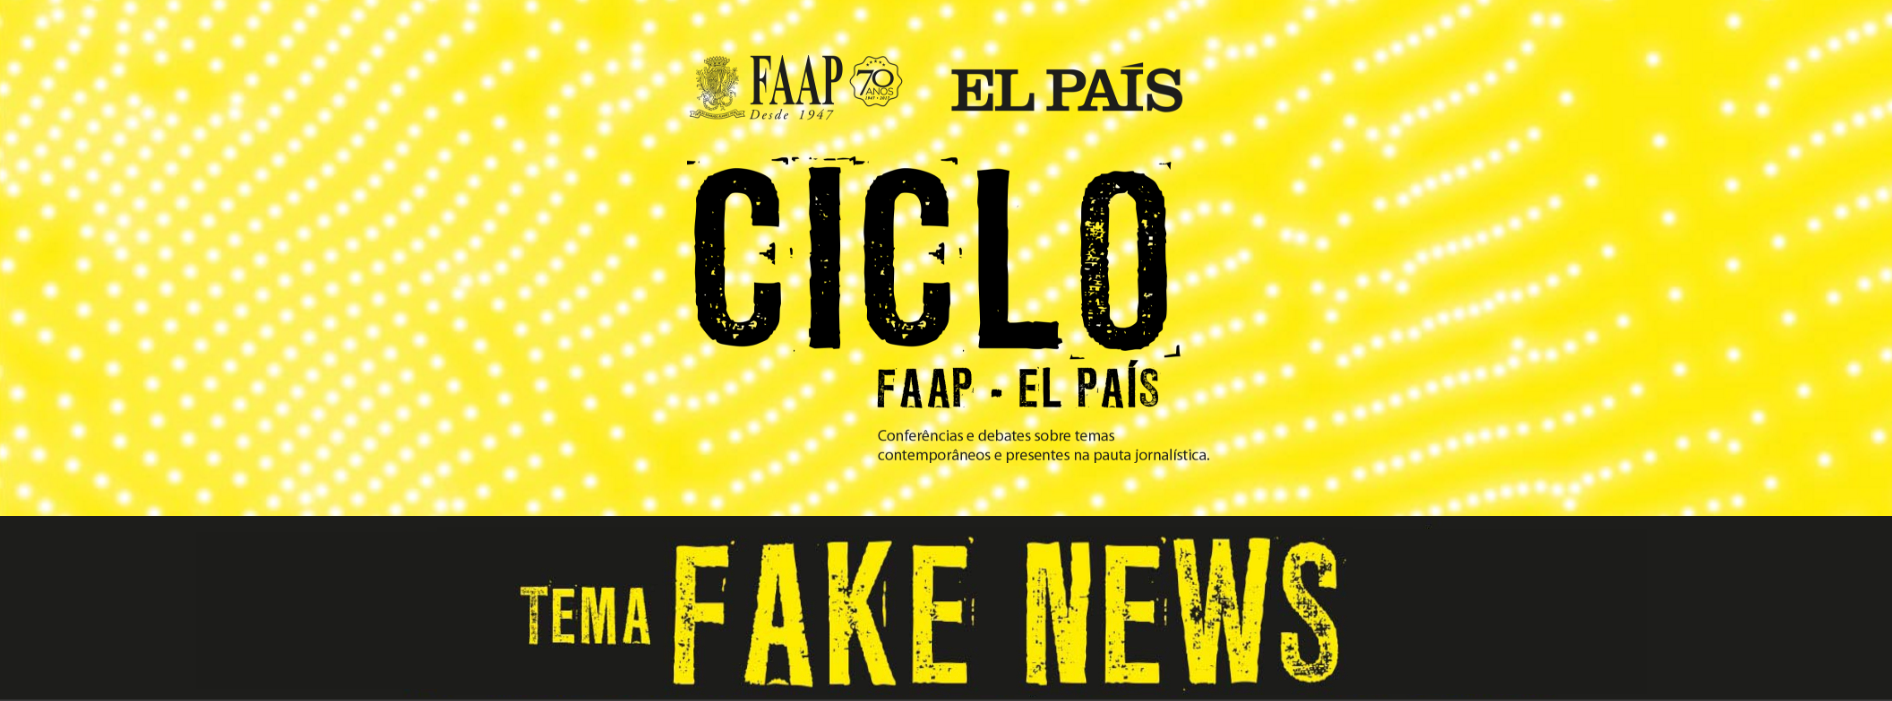 Fake News FAAP El País 3